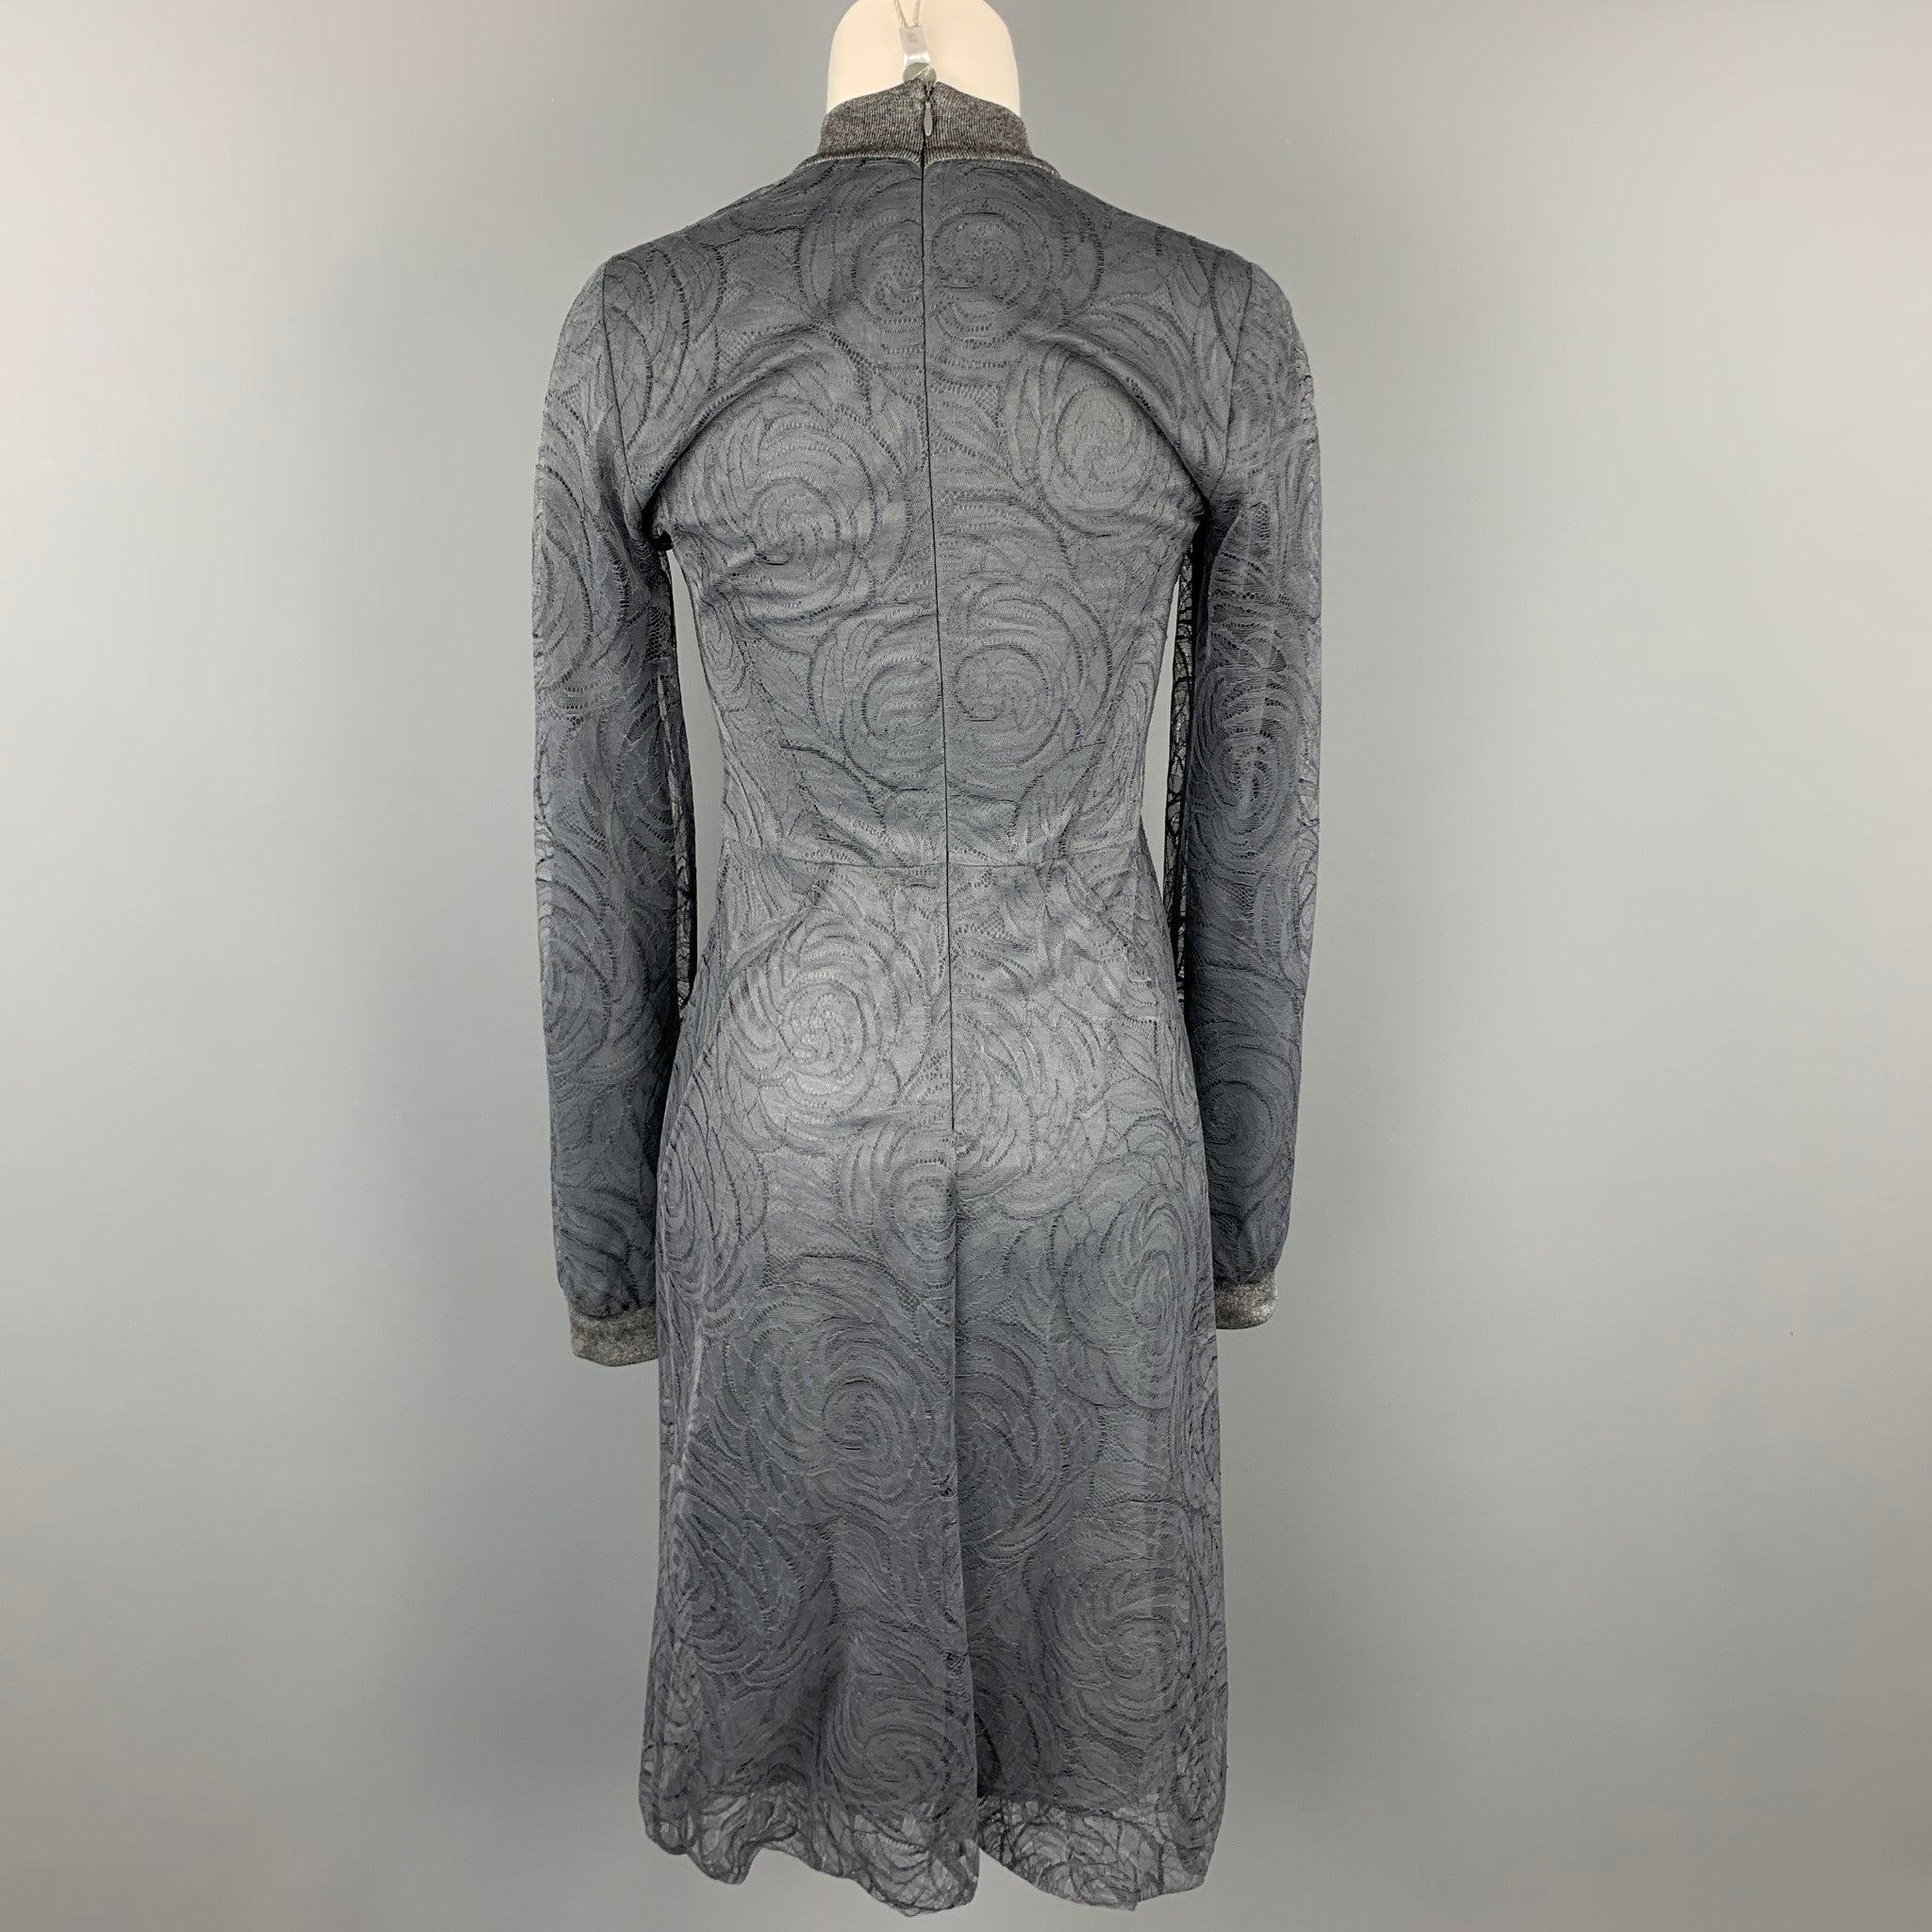 CALVIN KLEIN COLLECTION Size 4 Grey Lace Modal Blend Sheath Dress 1